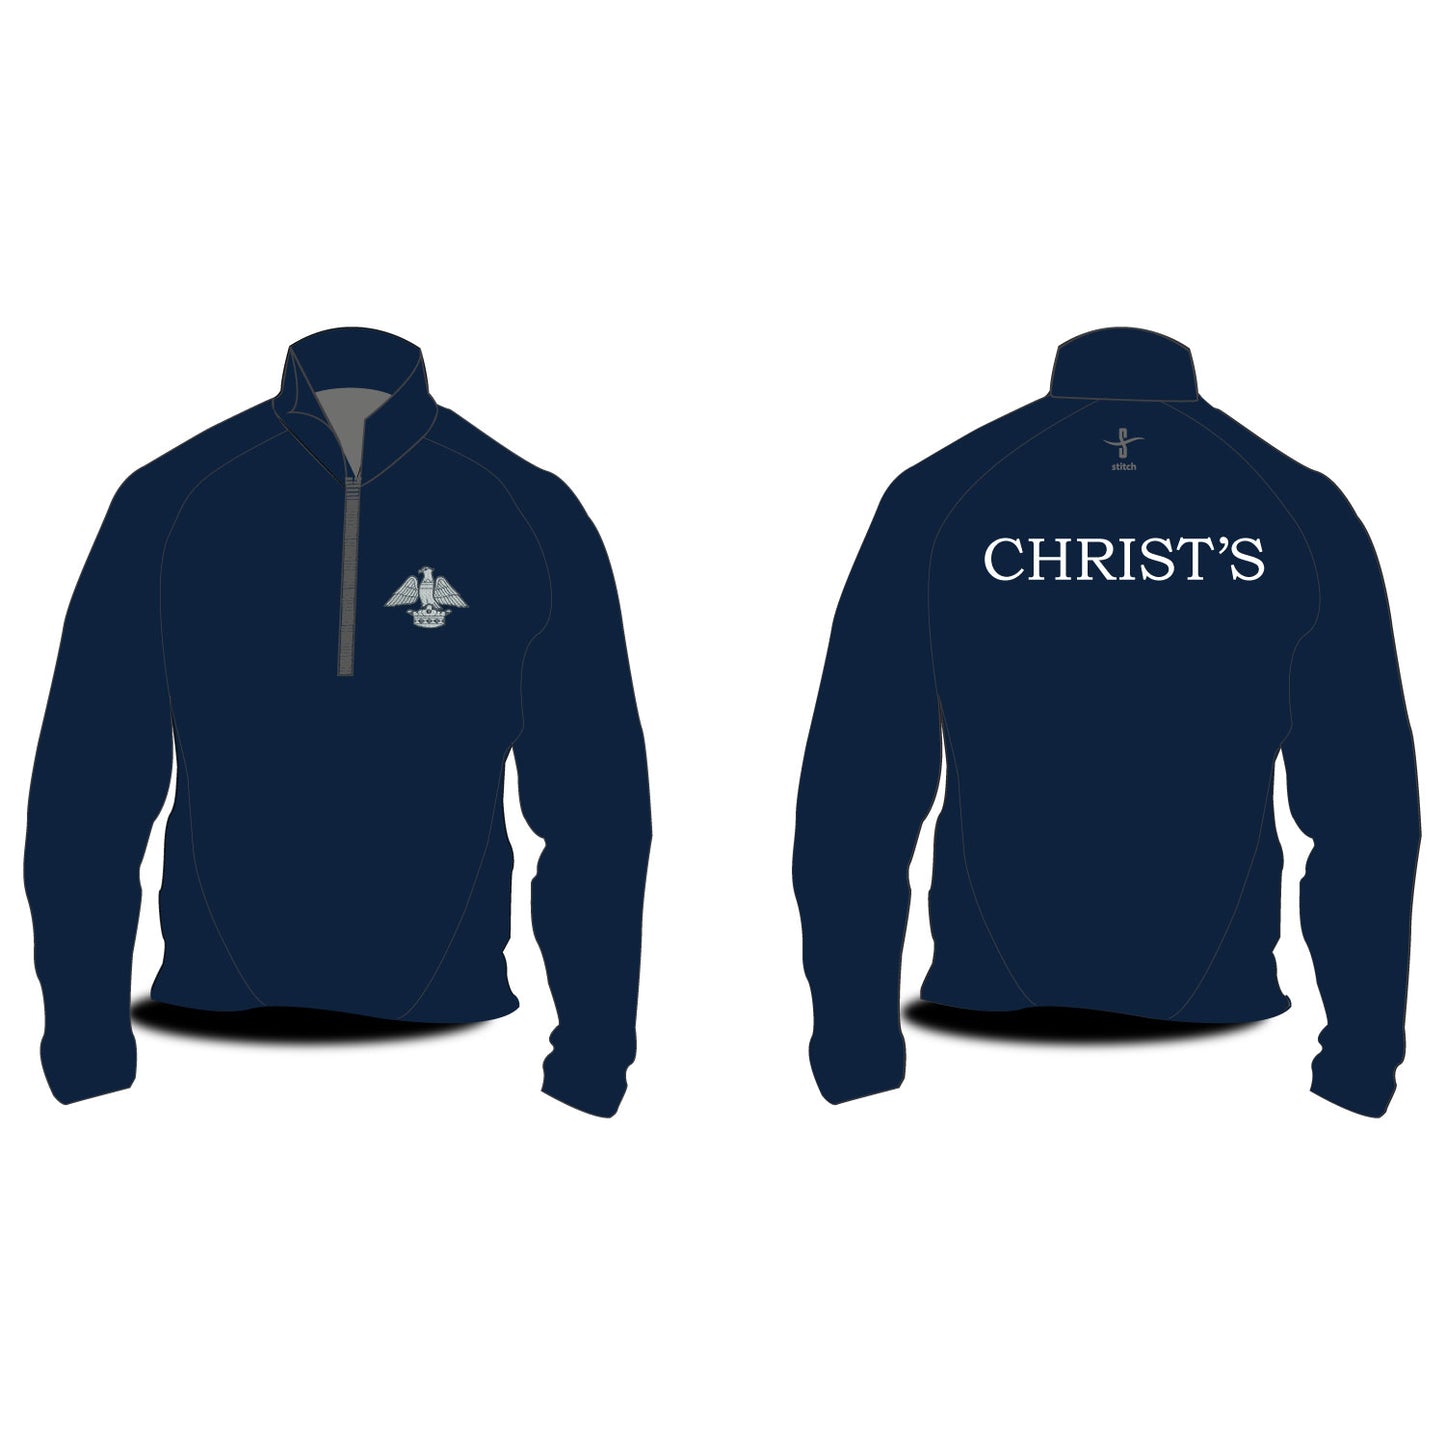 Christ's College Cambridge 24-7 Hard Shell Jacket